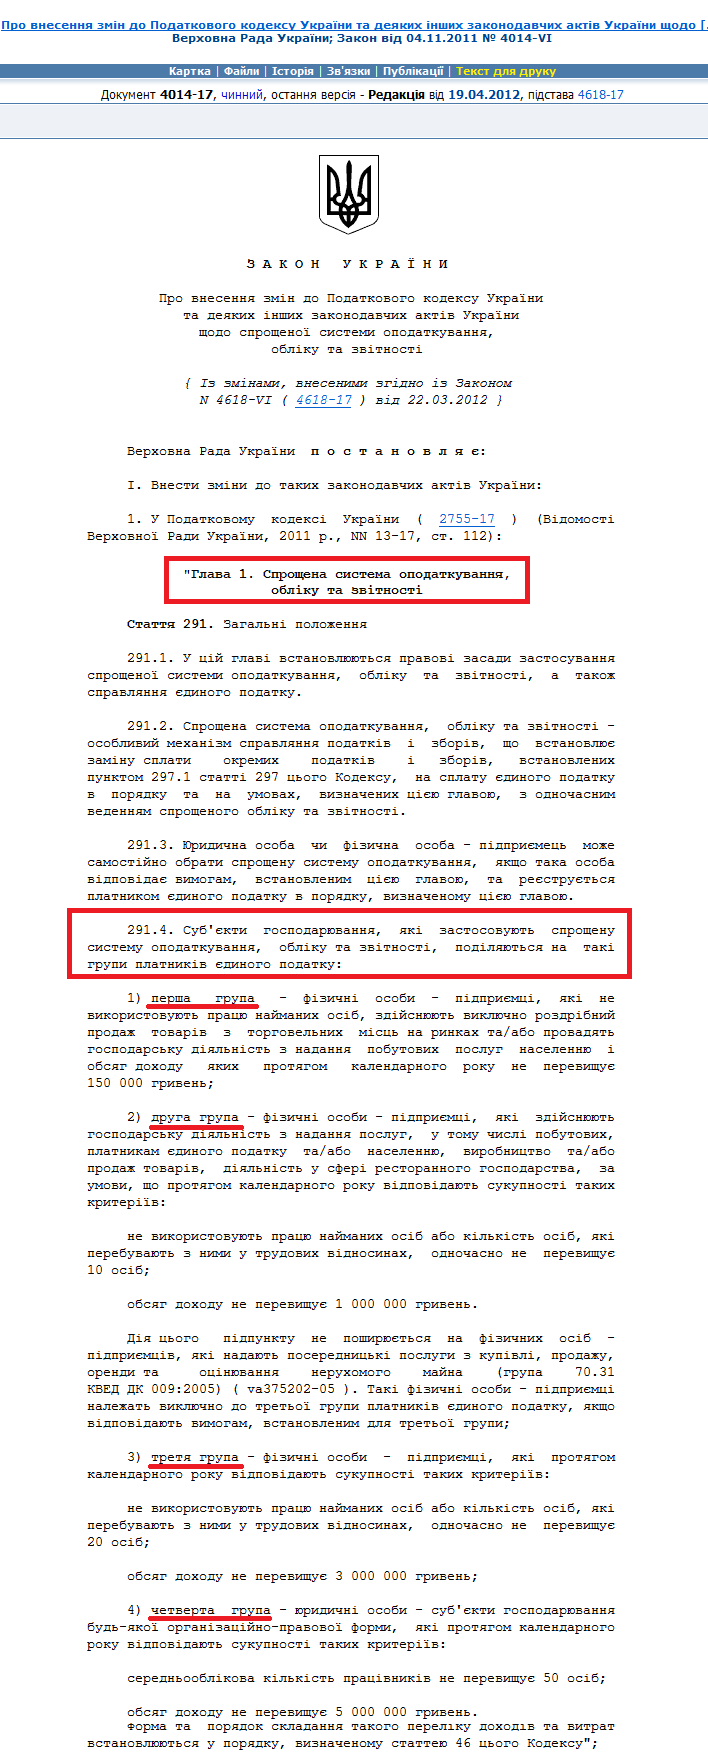 http://zakon1.rada.gov.ua/laws/show/4014-17/ed20120428